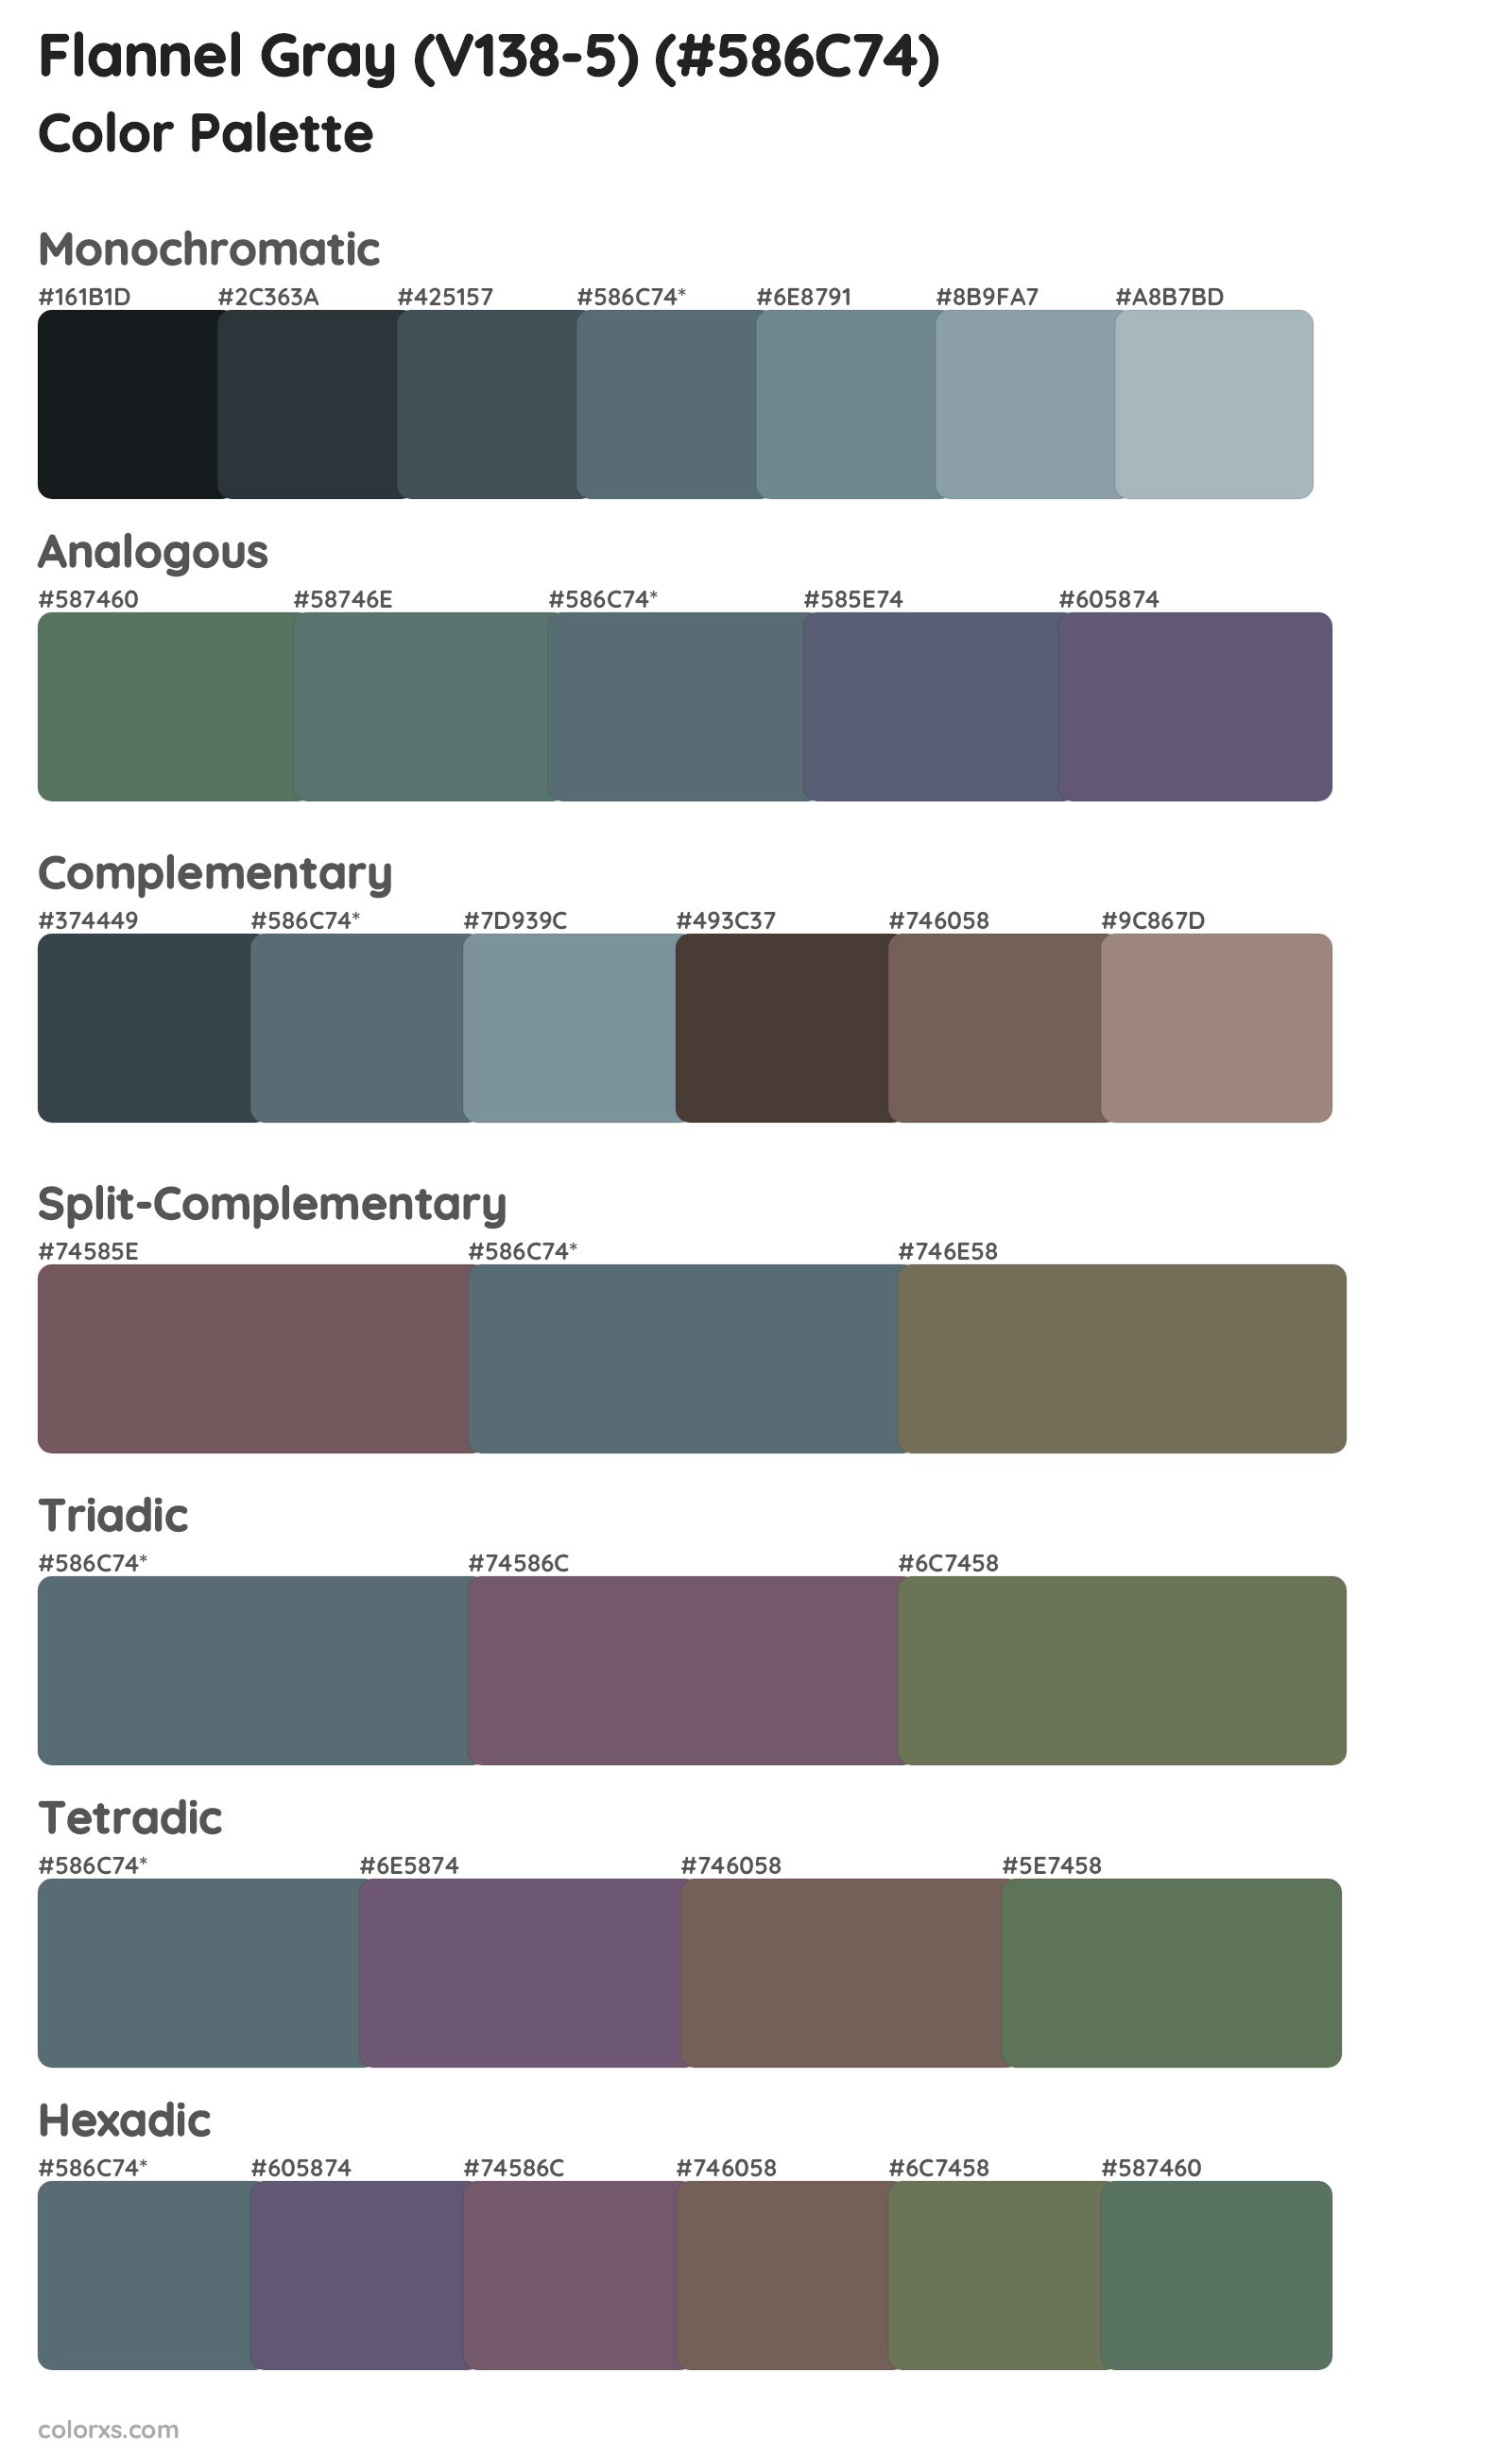 Flannel Gray (V138-5) Color Scheme Palettes